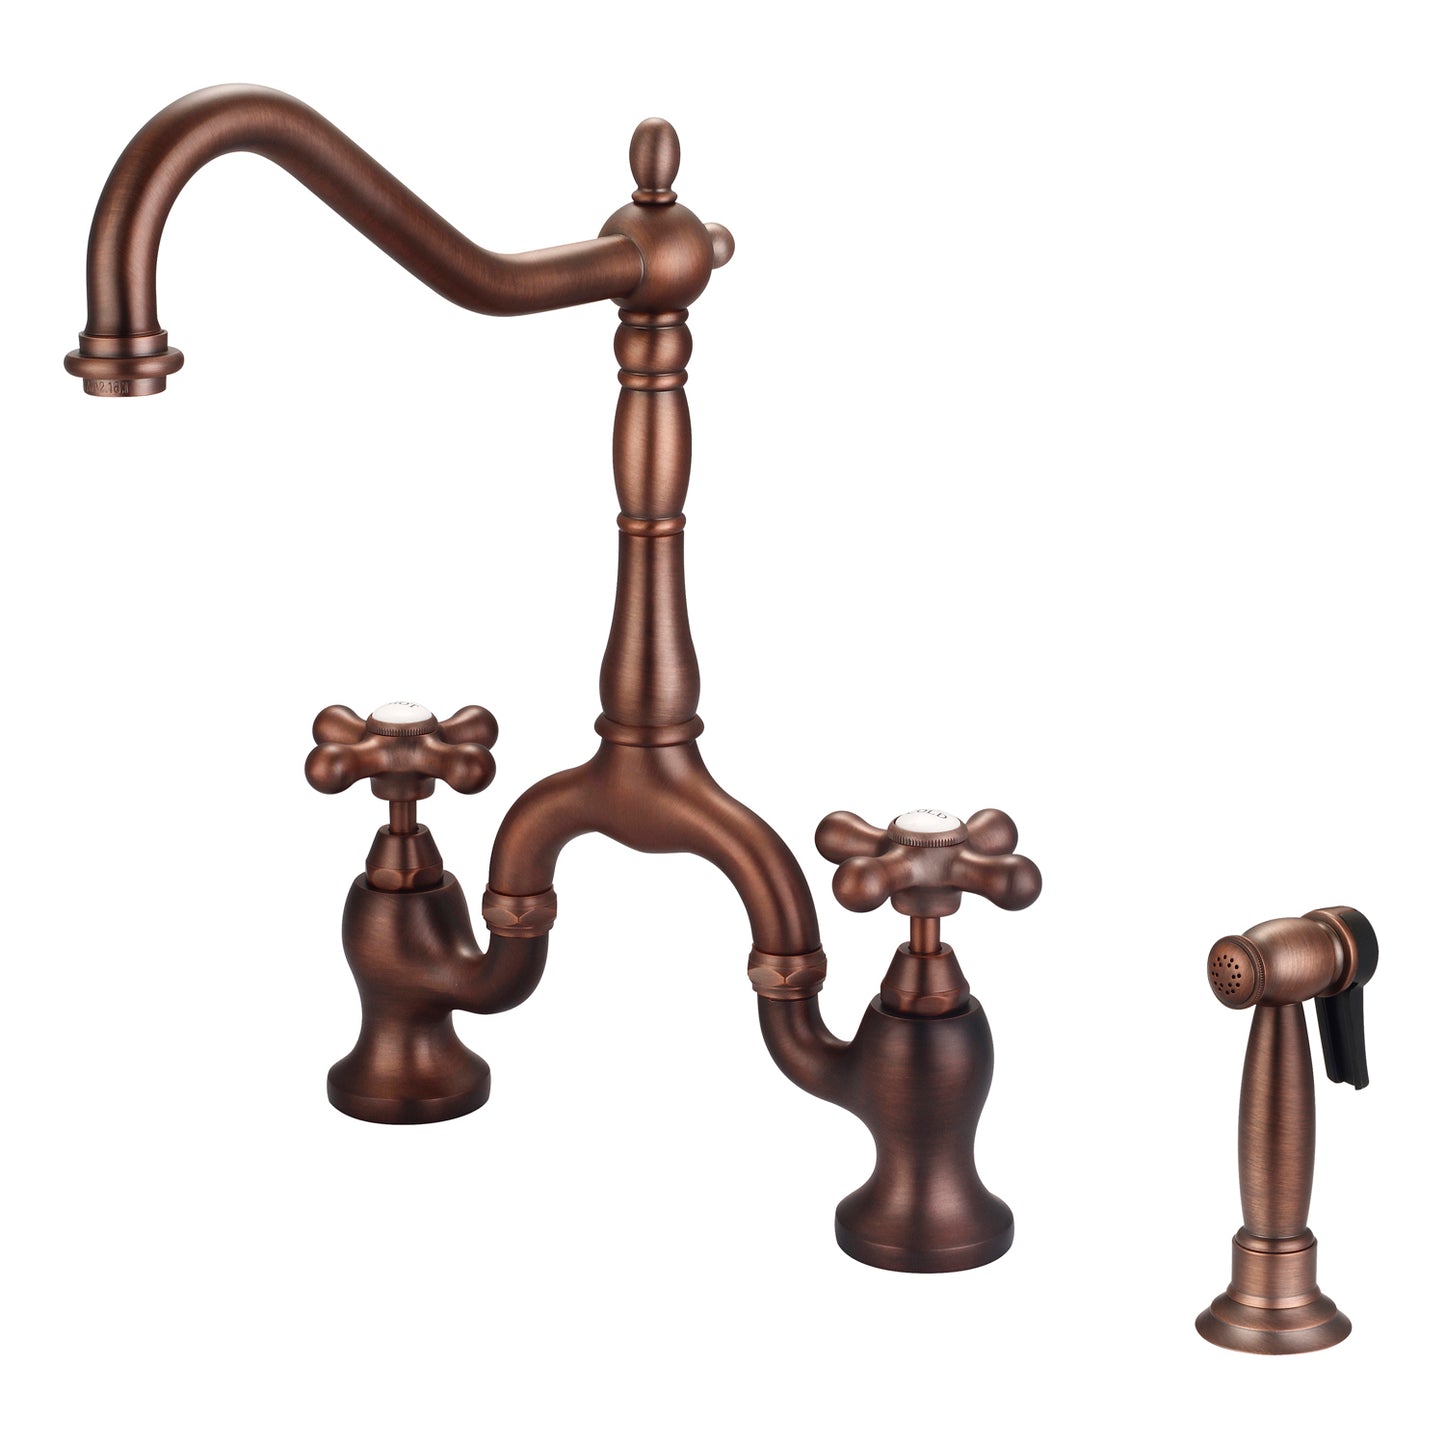 Carlton Kitchen Bridge Faucet, Sidesprayer & Metal Cross Handles, Oil Rubbed Bronze